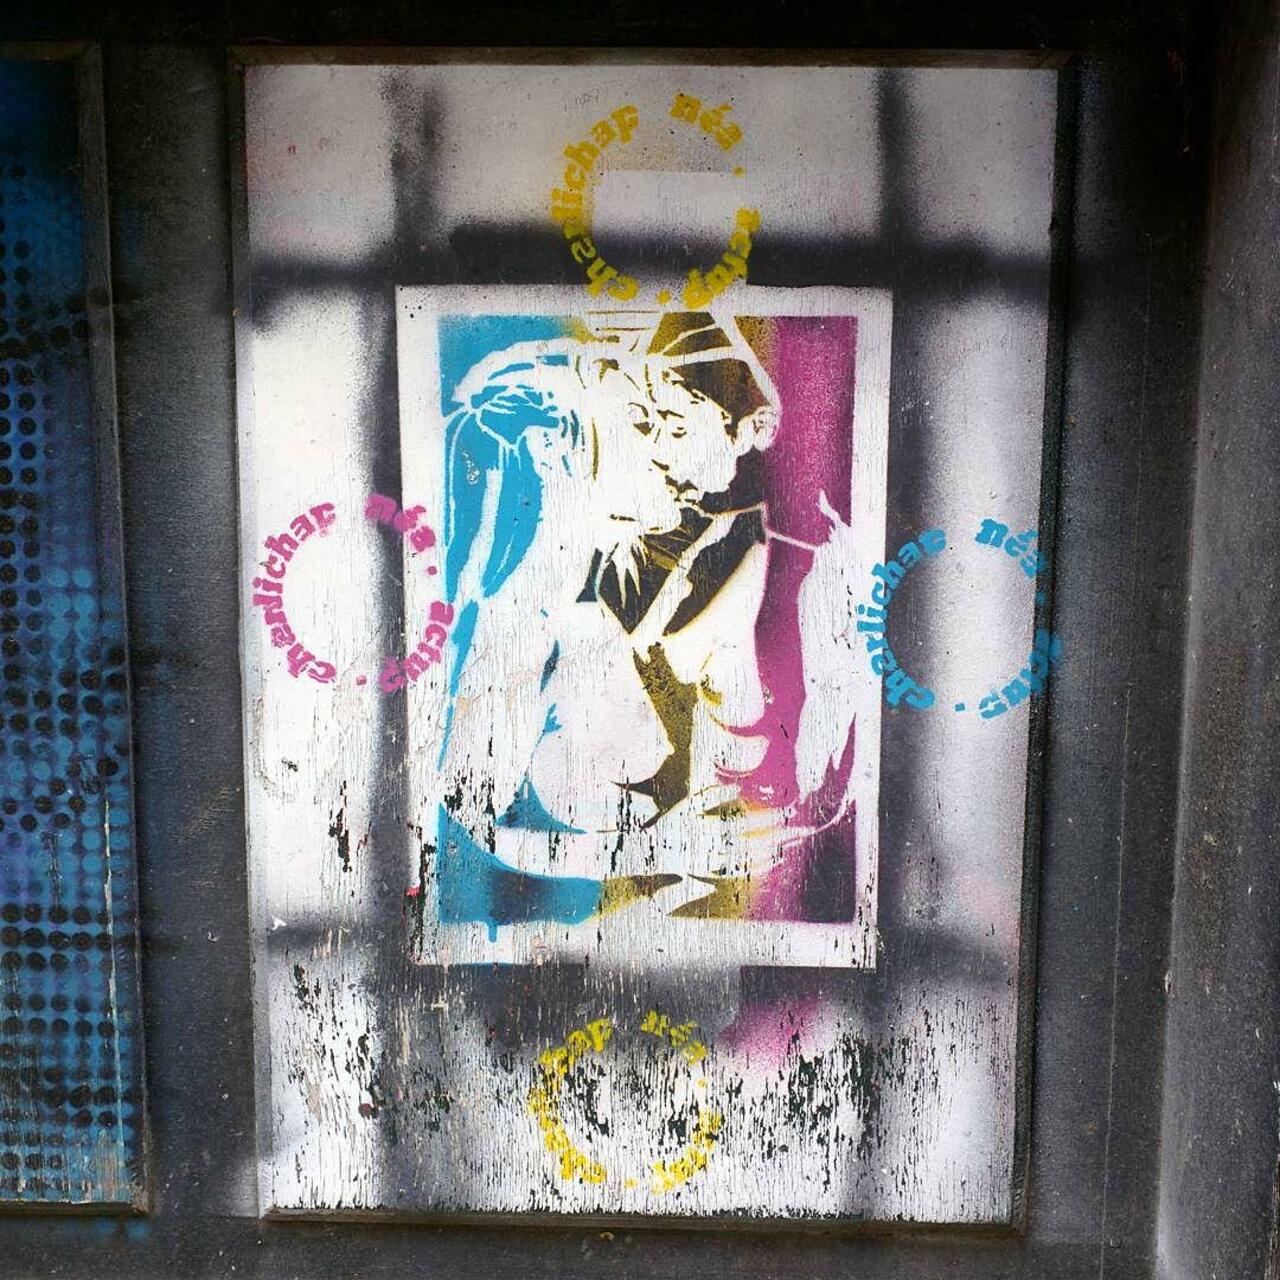 circumjacent_fr: #Paris #graffiti photo by alphaquadra http://ift.tt/1Lkr59C #StreetArt http://t.co/4K4FLLvzrT